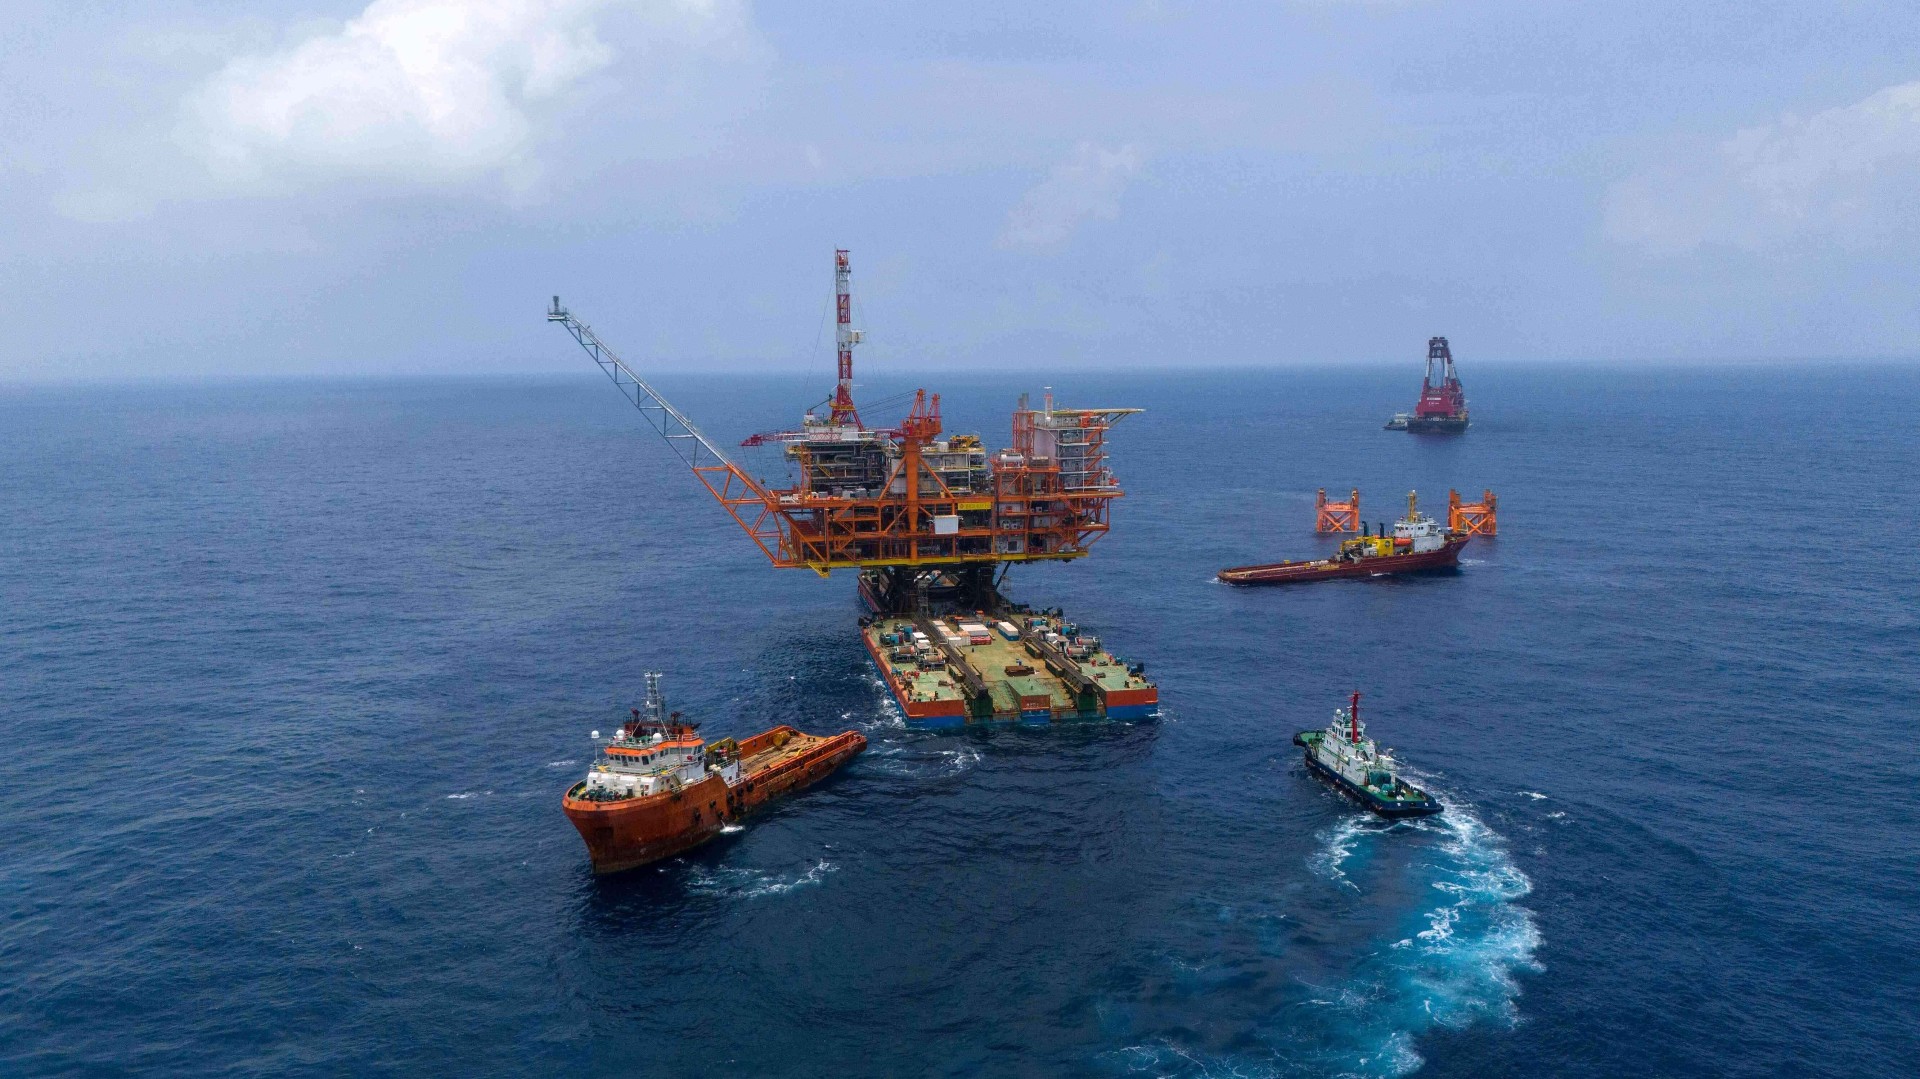 China's first intelligent offshore drilling platform installed